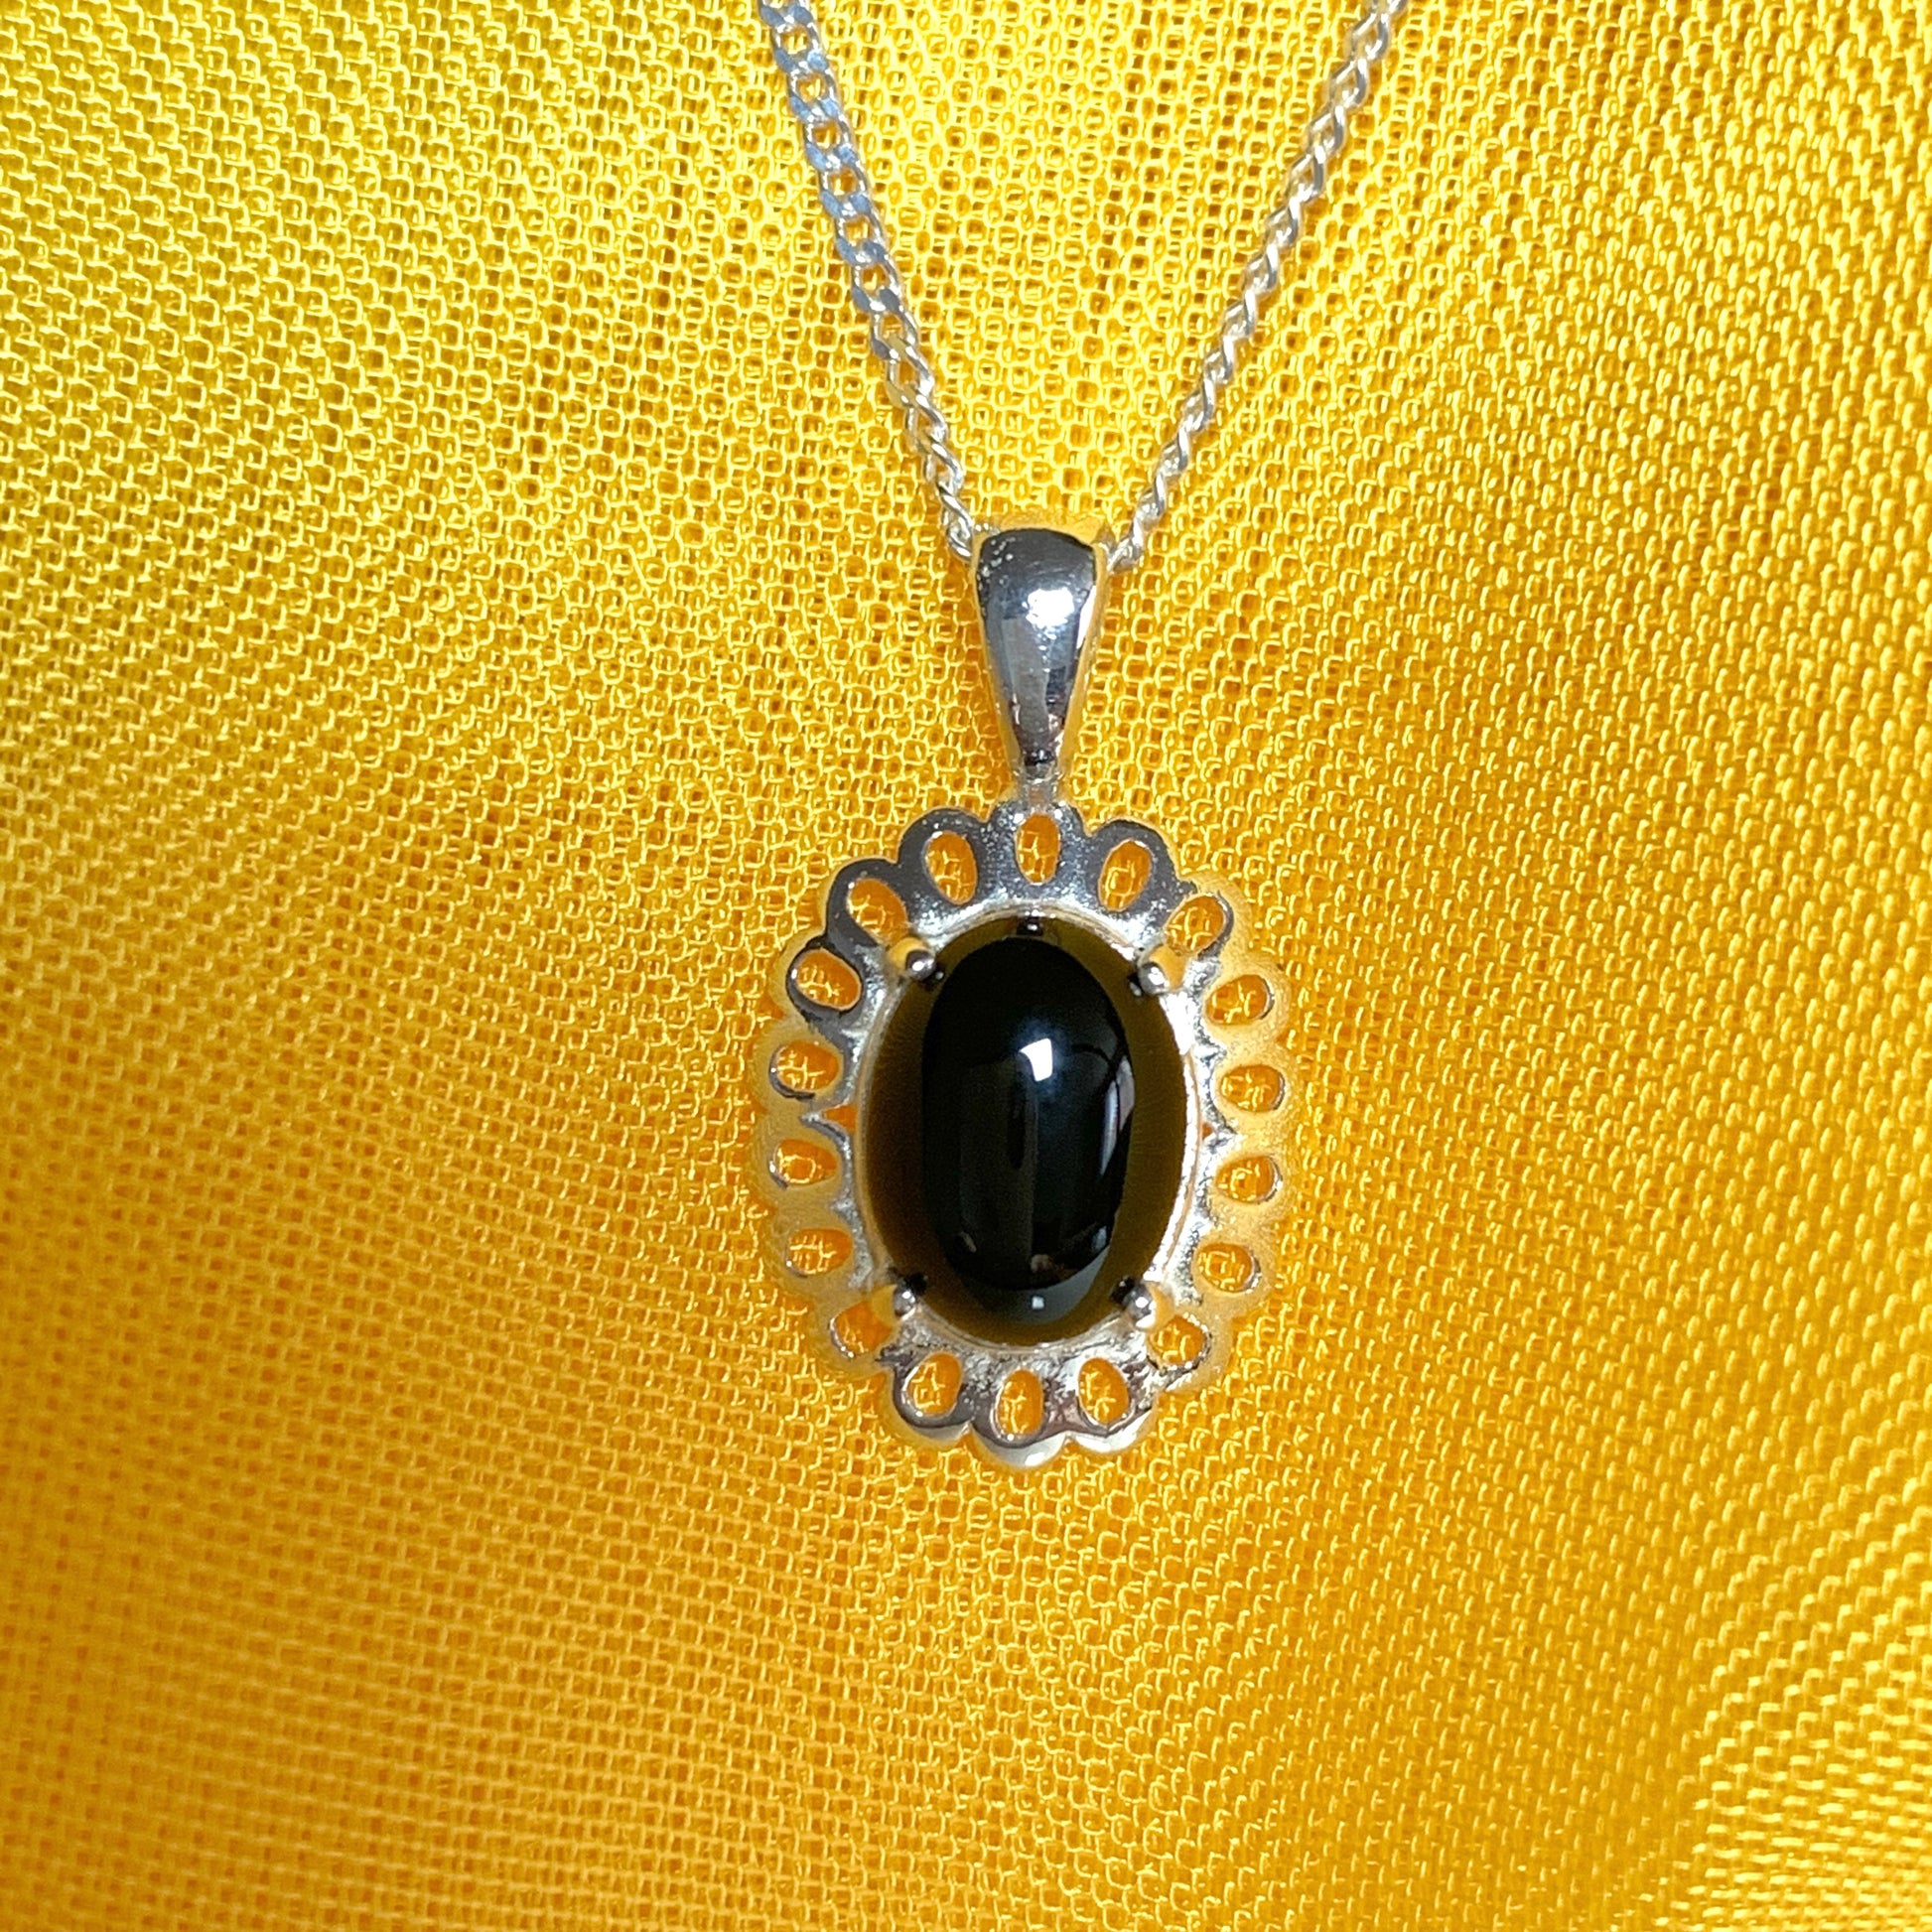 Black onyx oval sterling silver necklace